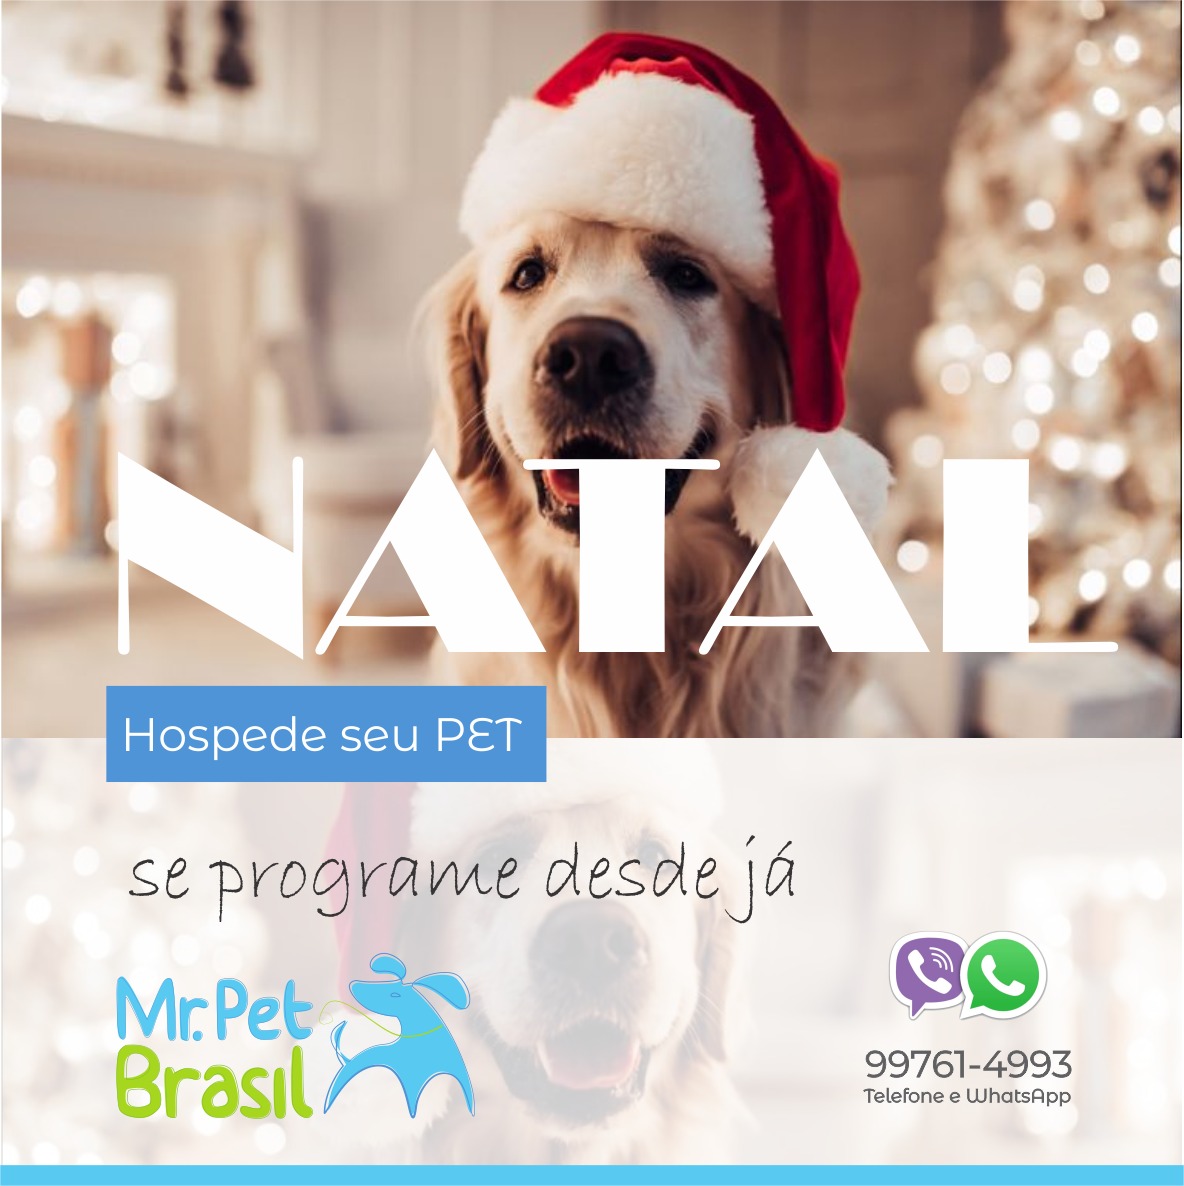 
Propaganda Natal Hotal Pet Hospede seu pet no feriado de Natal



